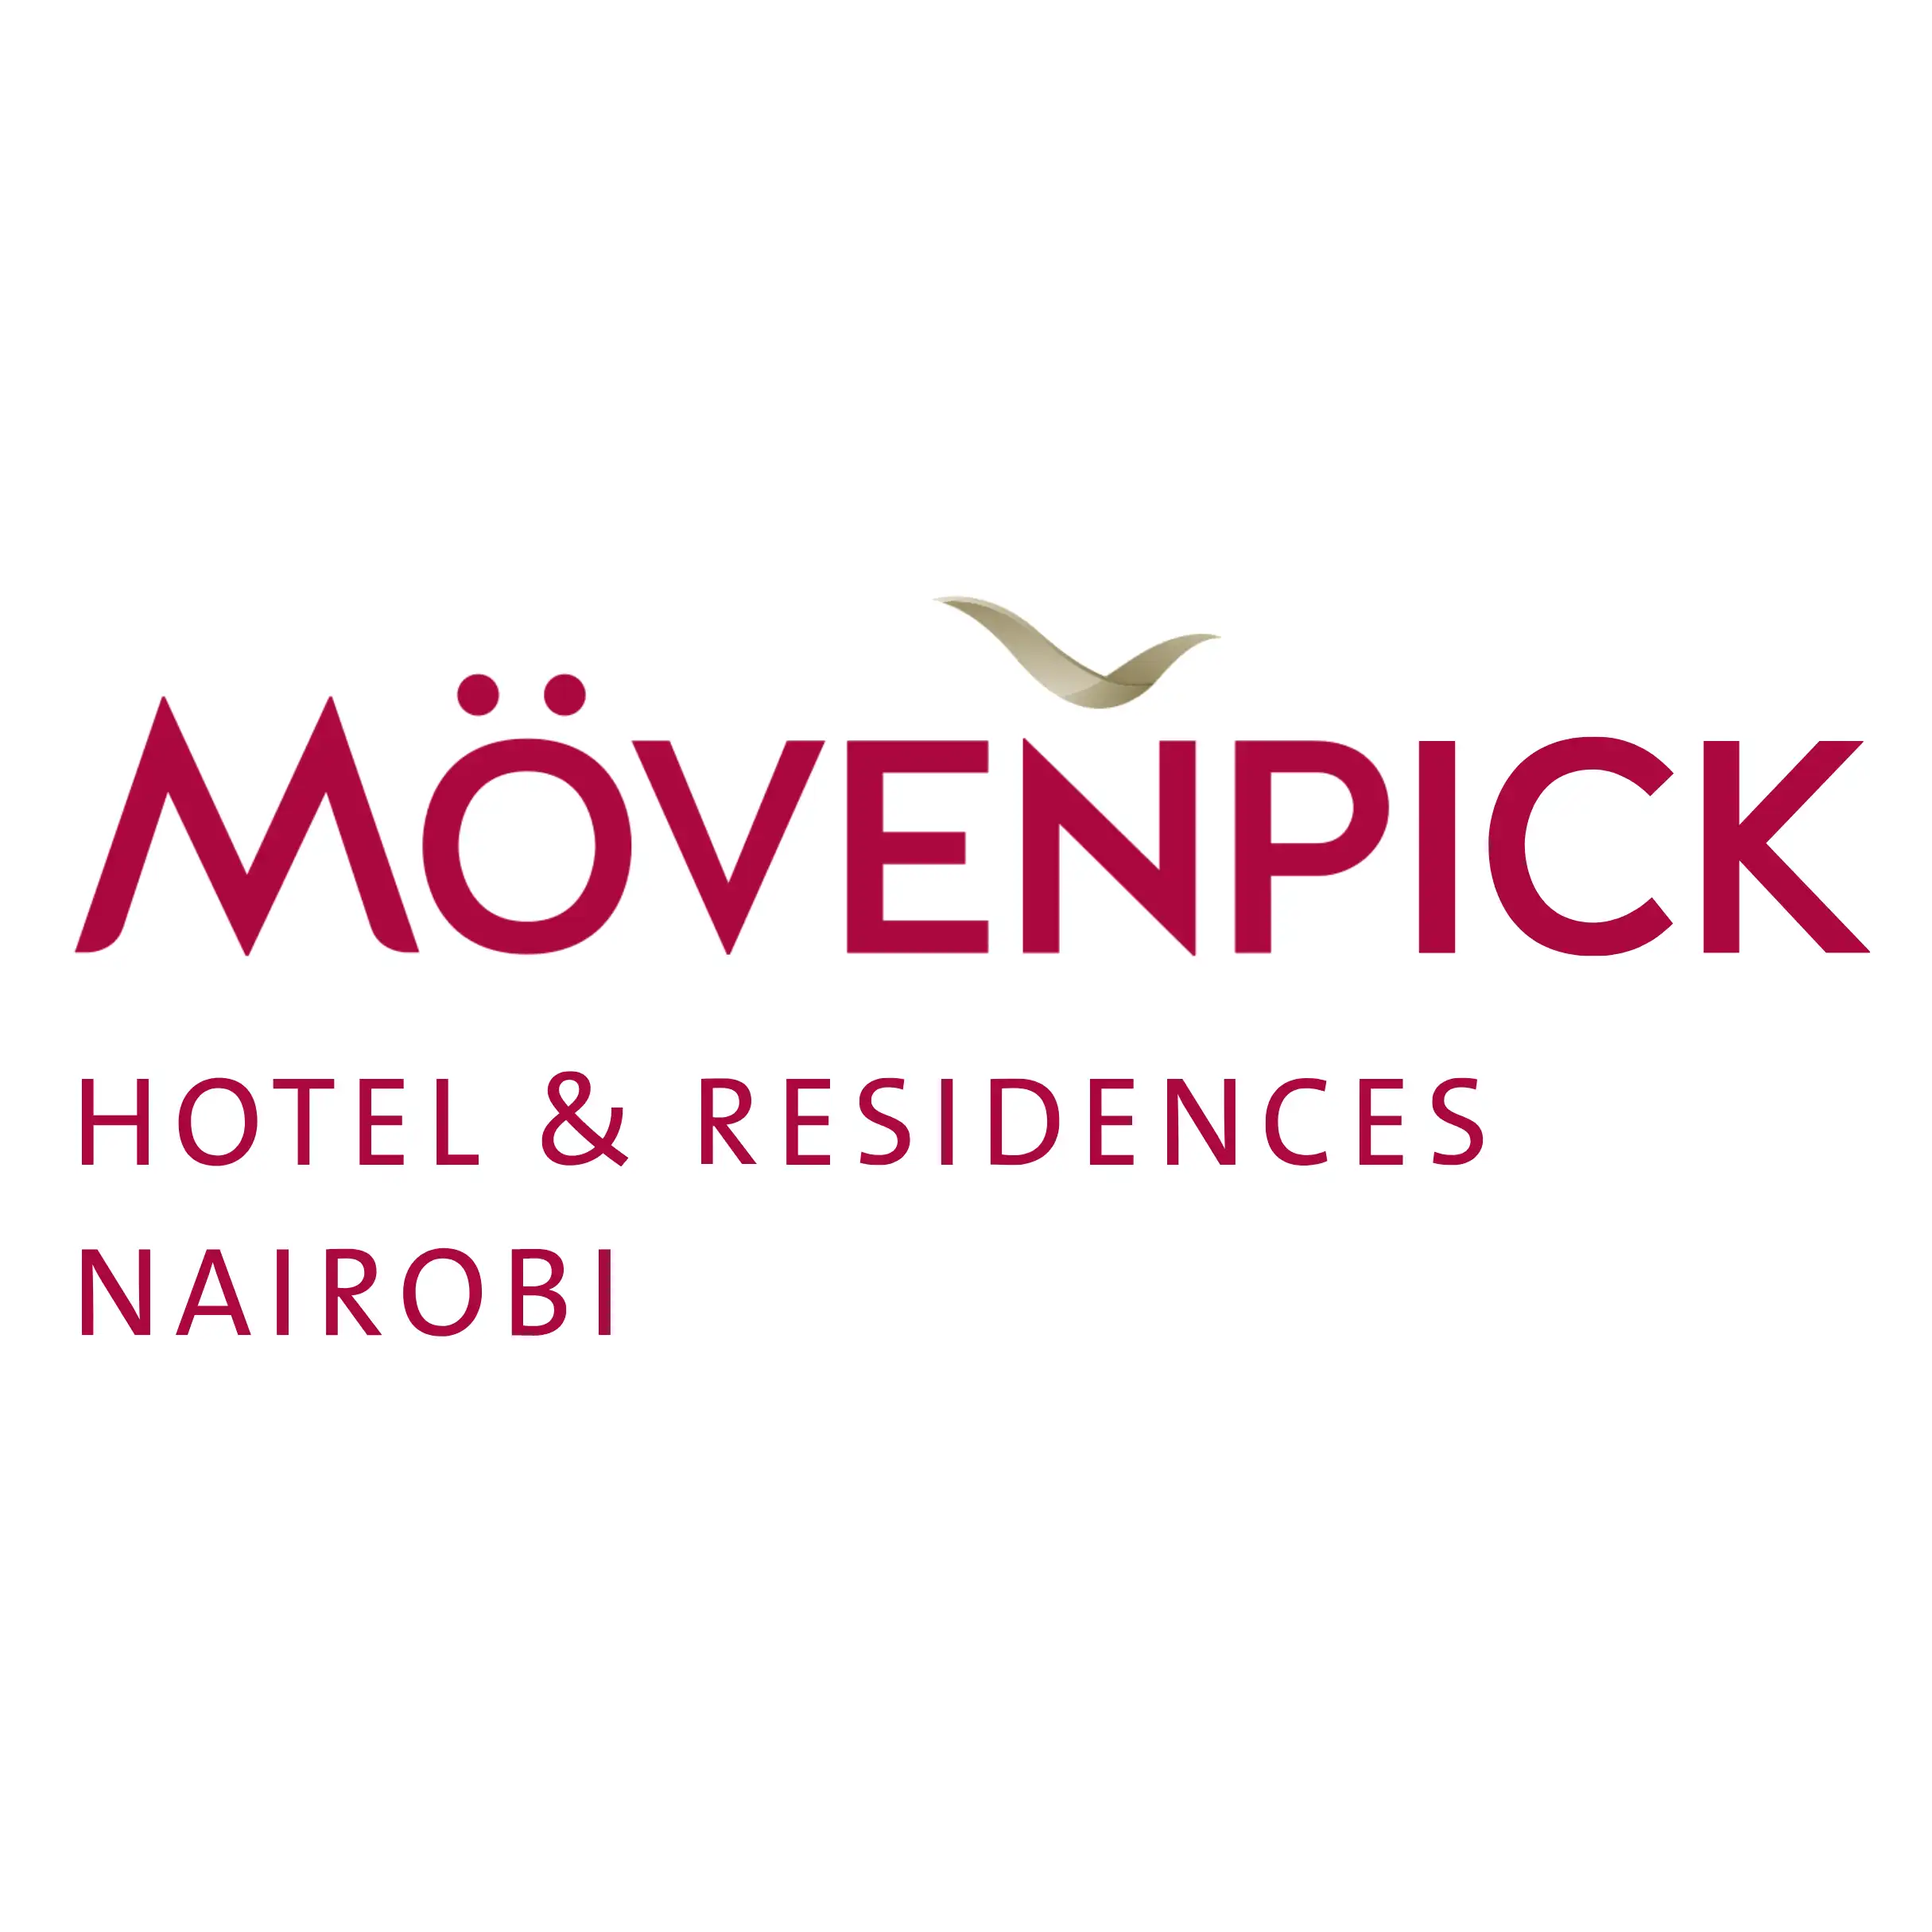 Movenpick Hotel & Residences